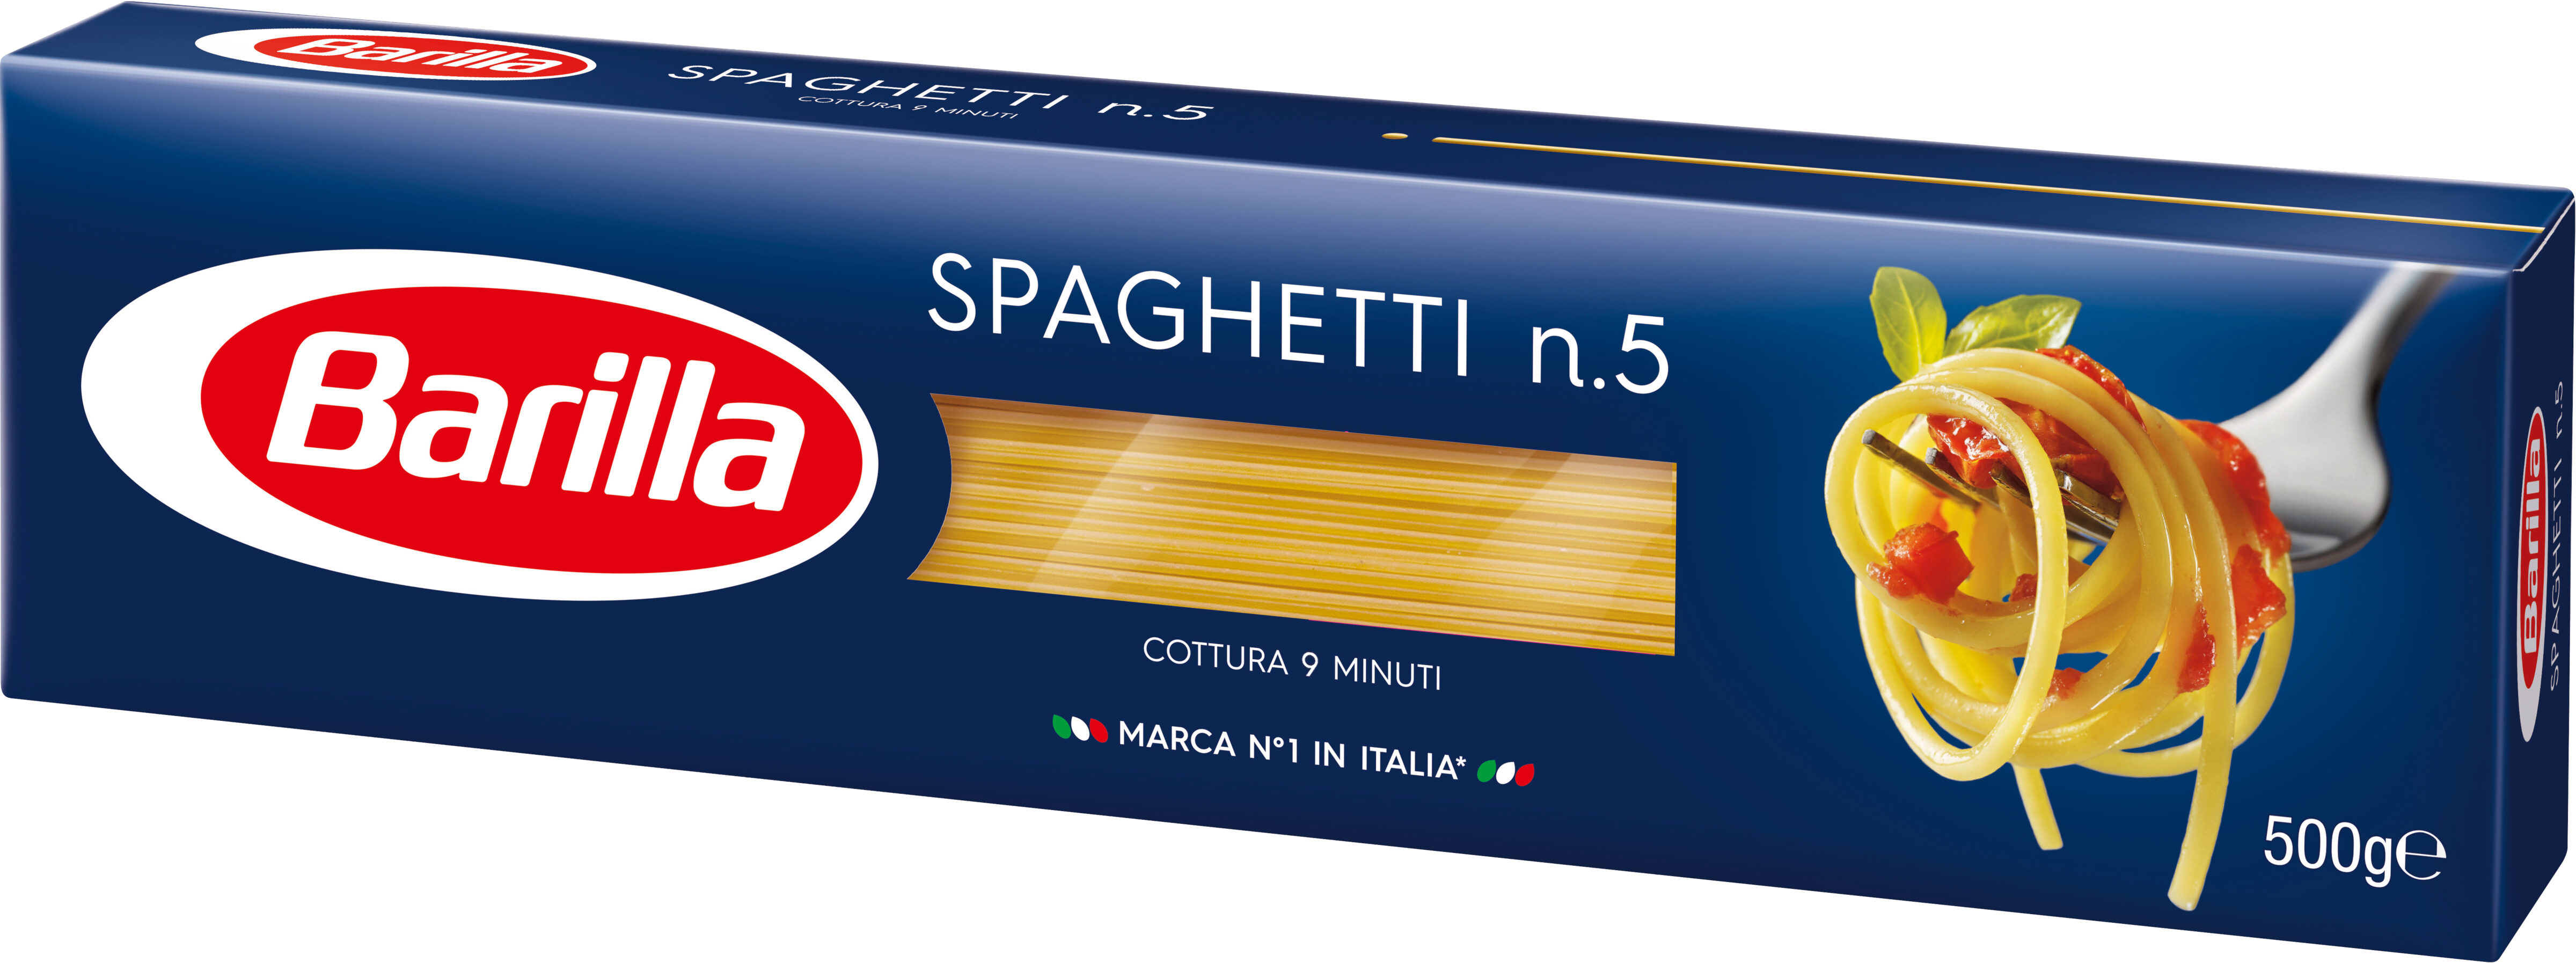 Barilla pates spaghetti n°5 500g - Product - en